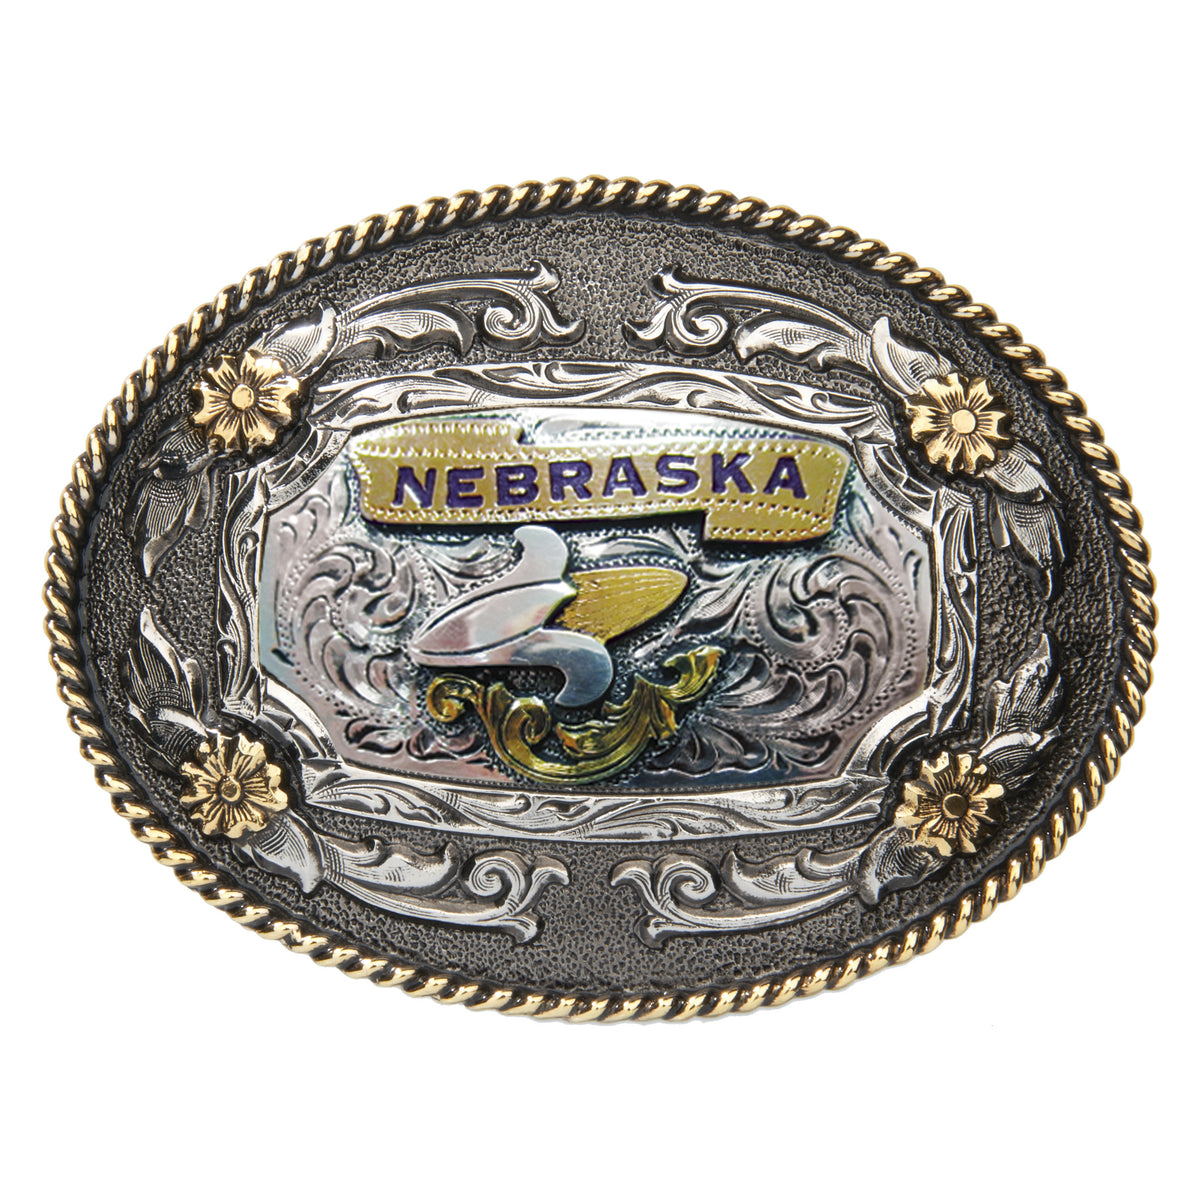 Nebraska — Oval Rope Edge Buckle